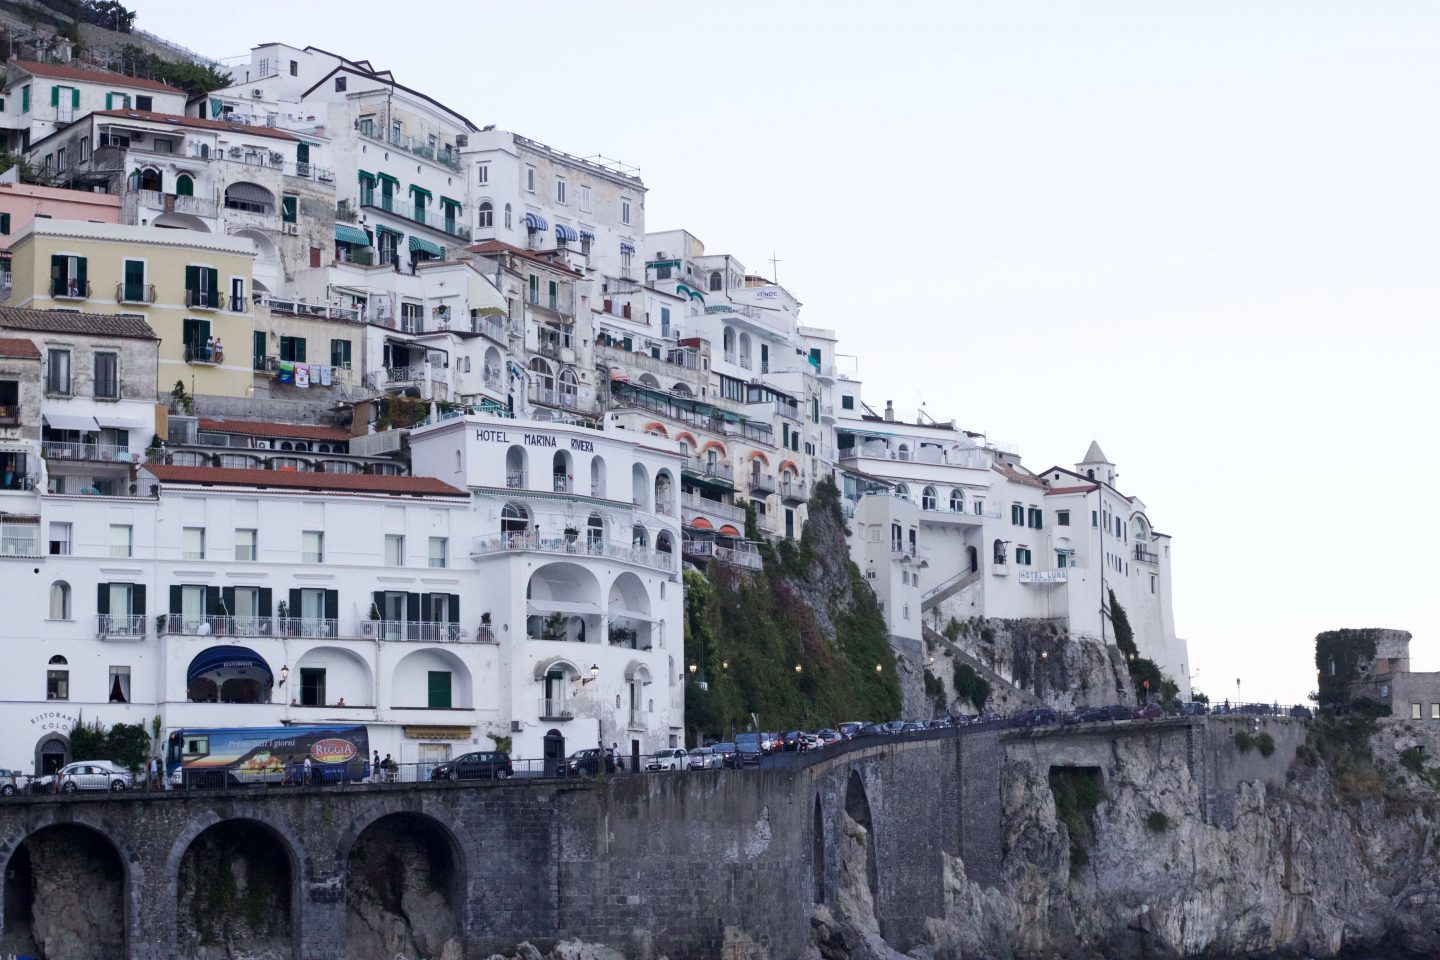 City guide Italie Côte Amalfitaine Positano Amalfi Maiori L'atelier d'al blog lifestyle mode DIY travel